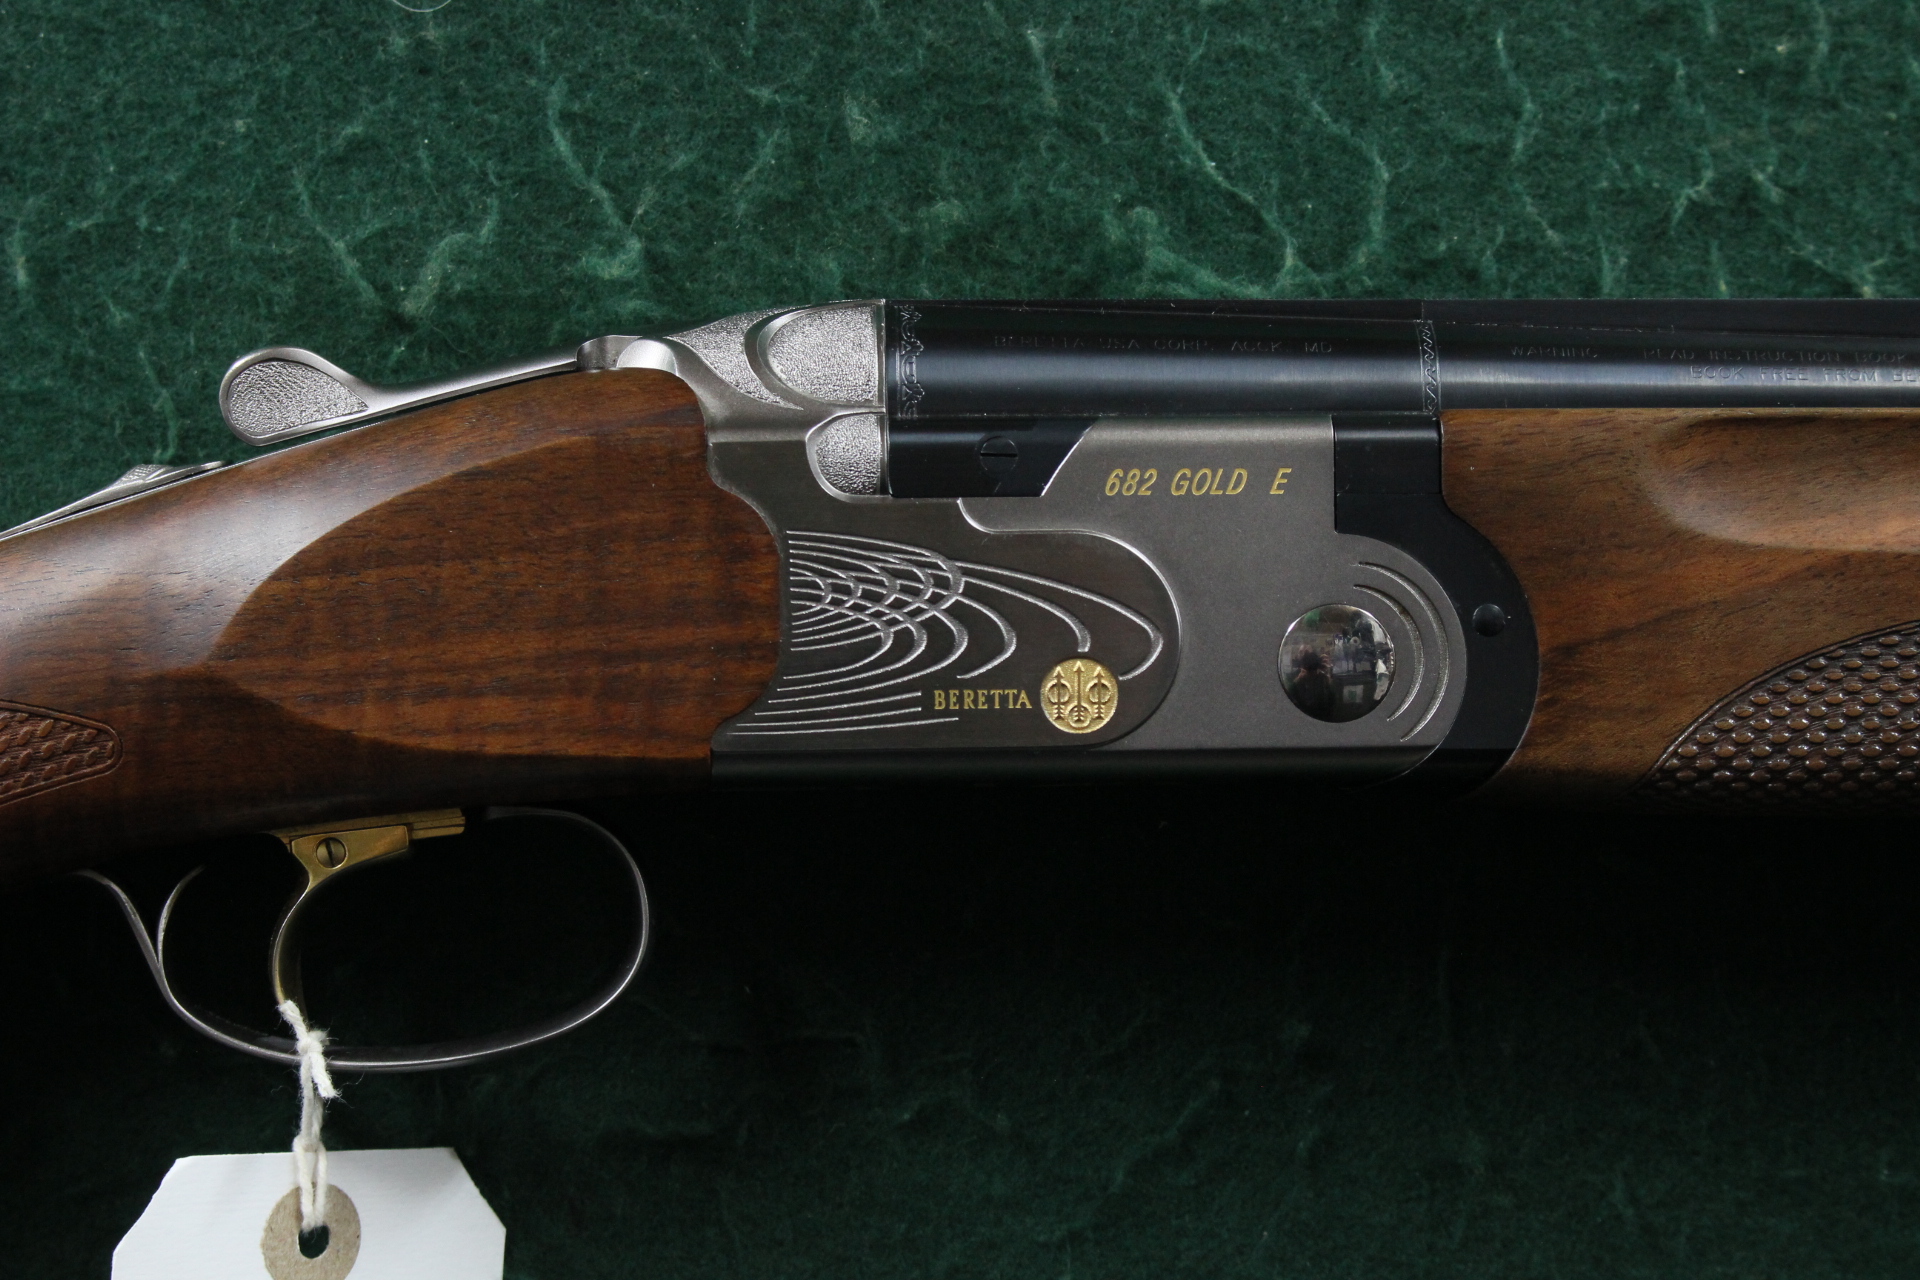 Beretta 682 Gold E : Bookham Guns.